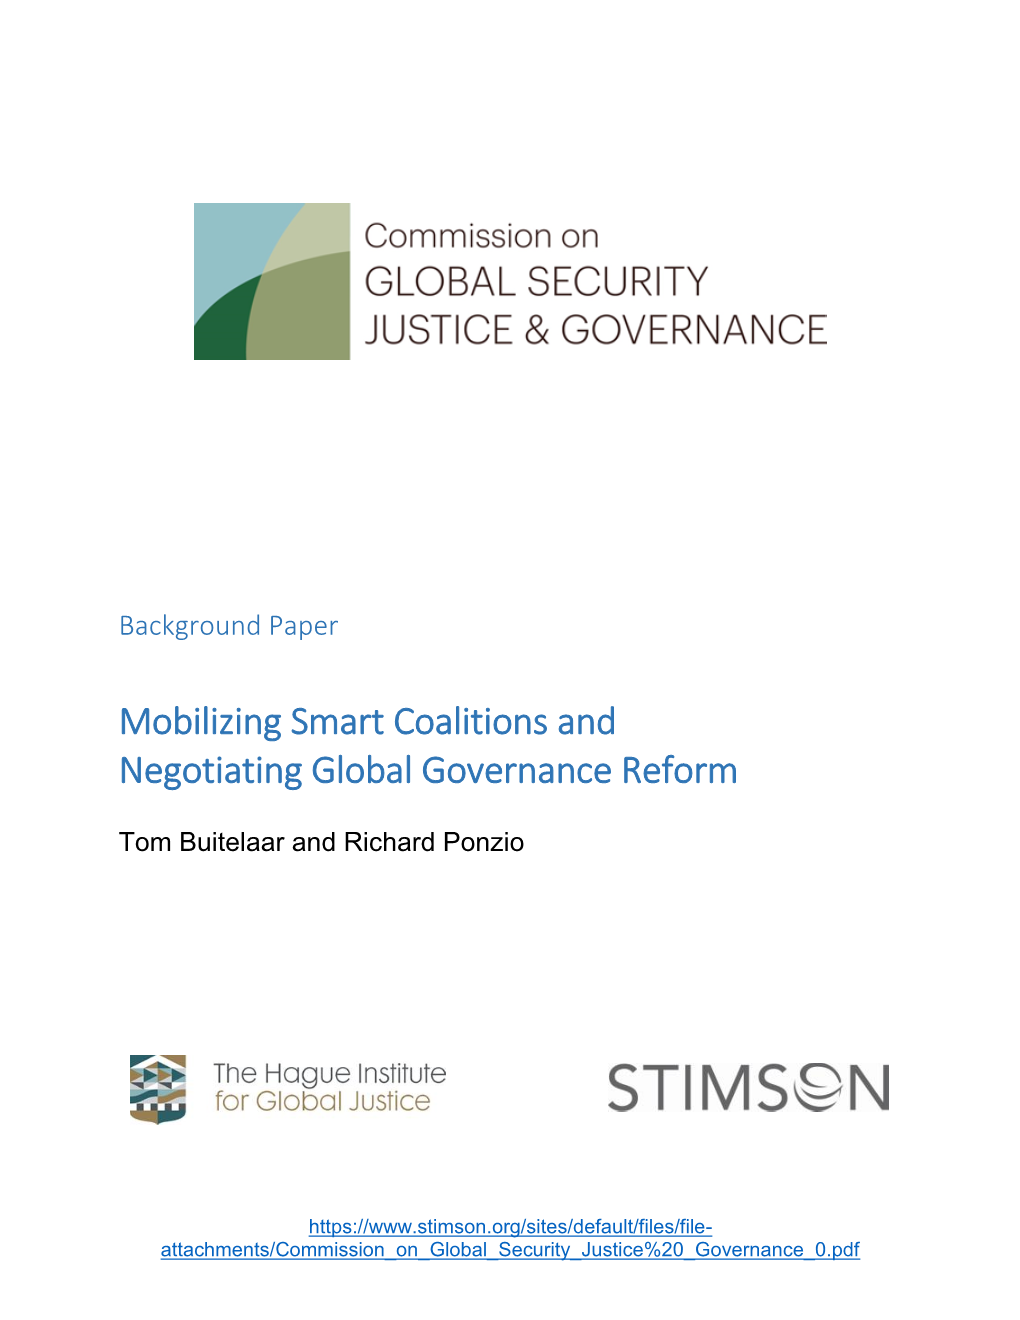 Mobilizing Smart Coalitions and Negotiating Global Governance Reform